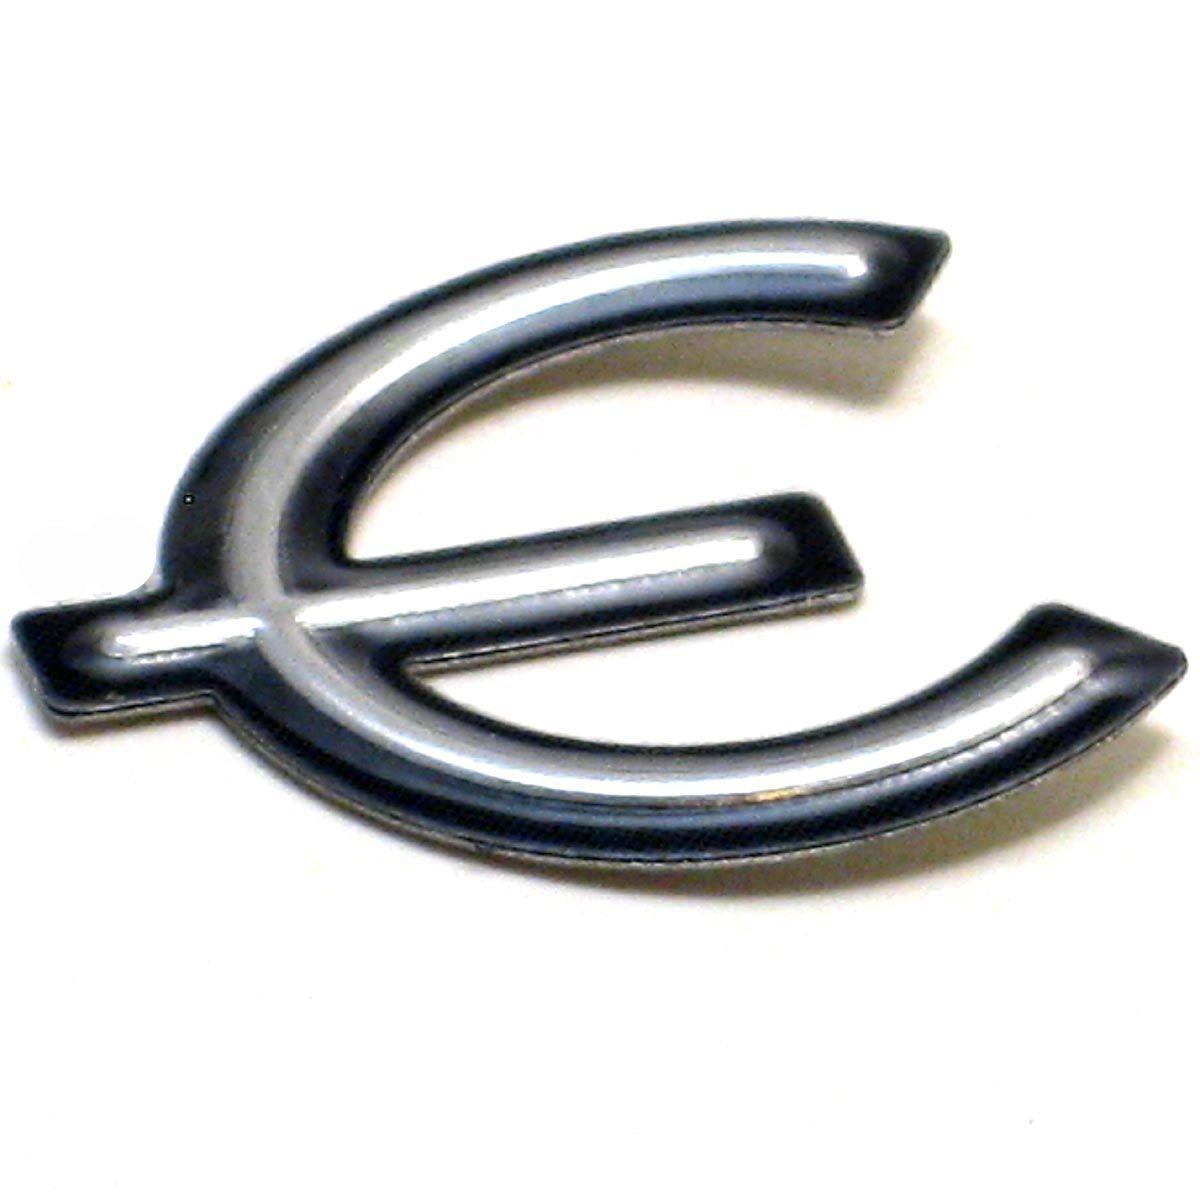 Epiphone Logo - Epiphone E Stamped Metal Replacement Logo Decal / Sticker